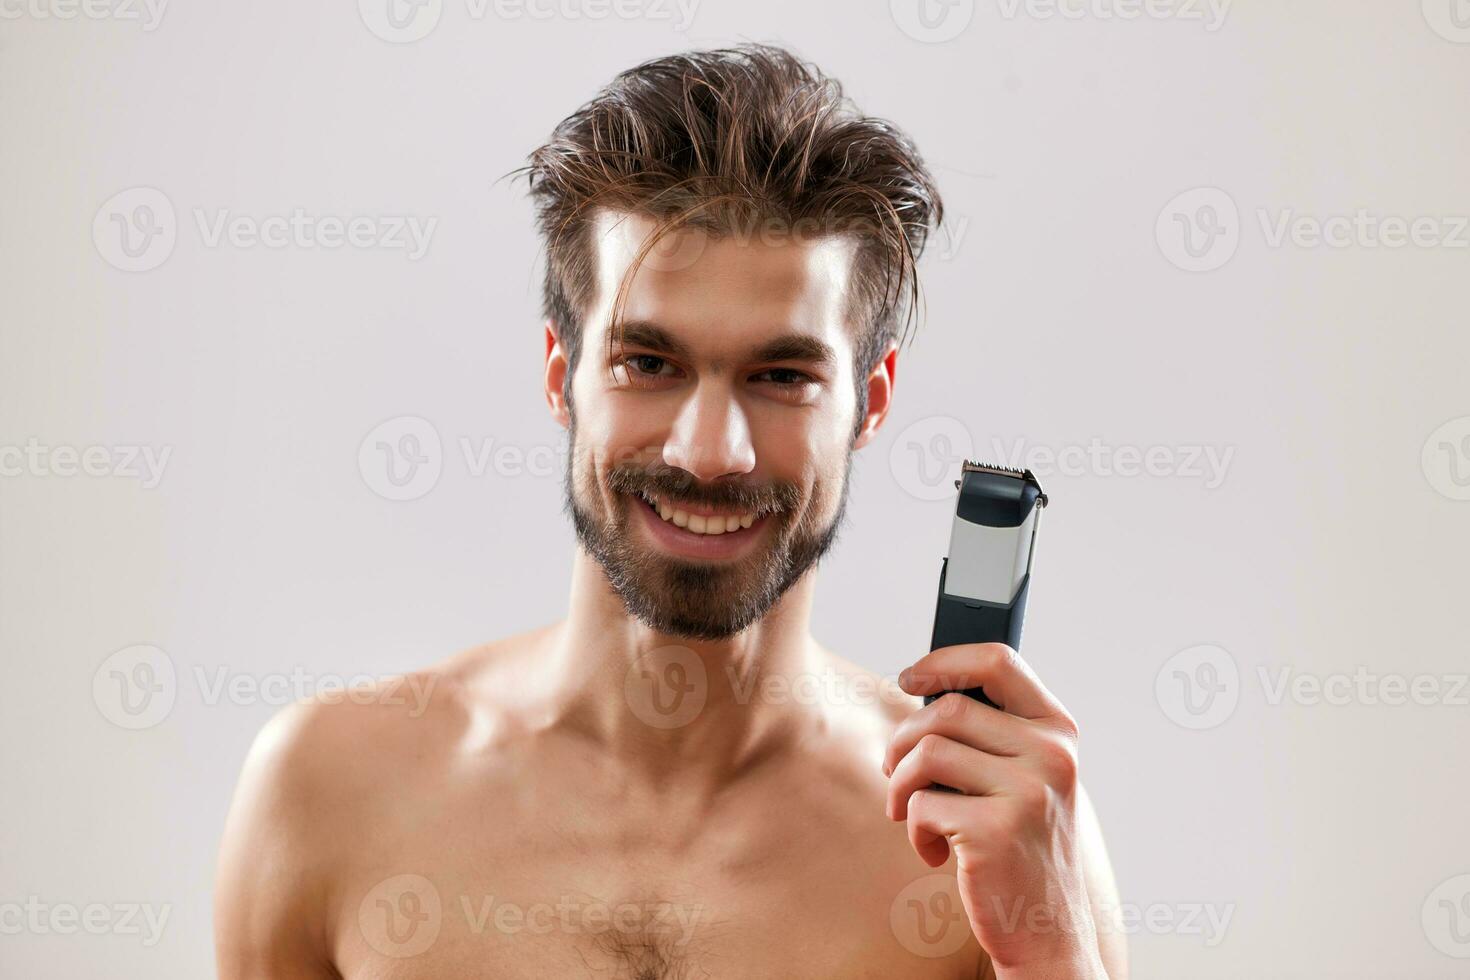 A man grooming his beard photo